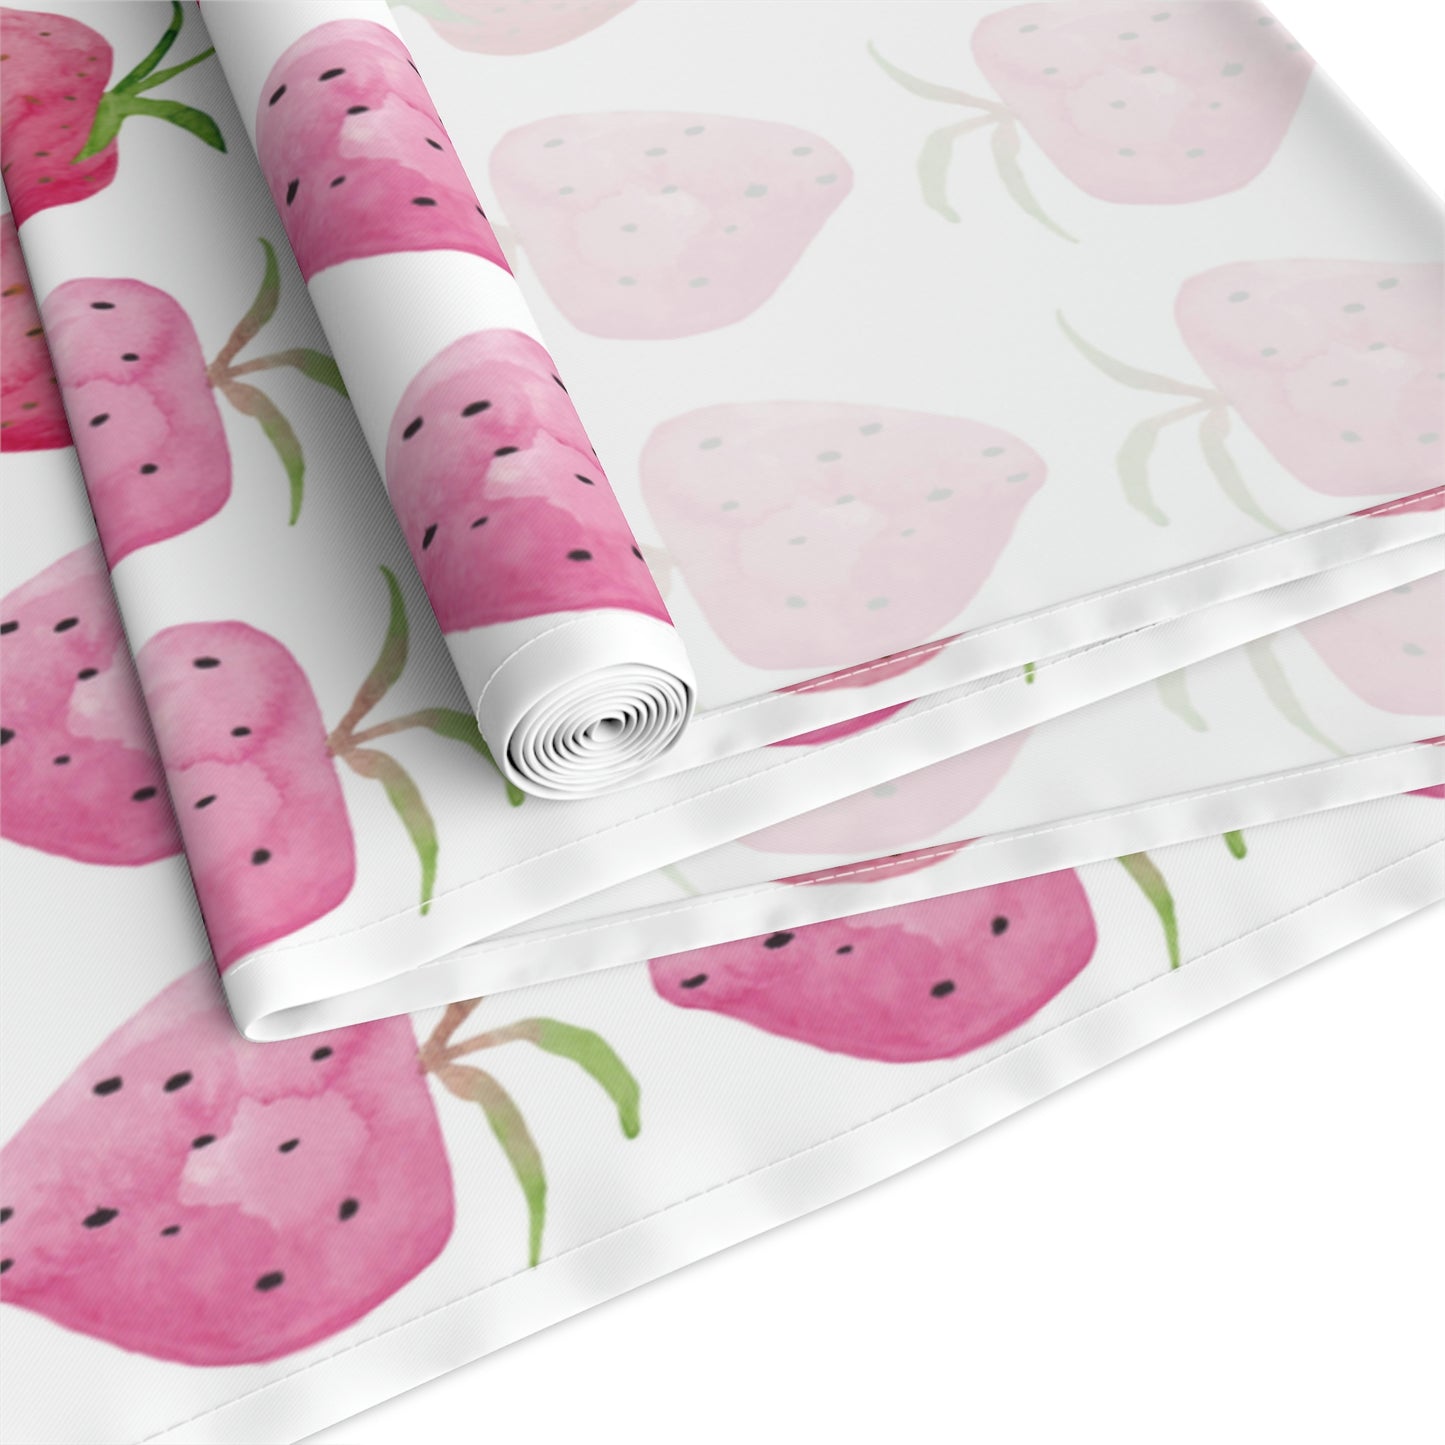 Strawberry Decor / Strawberry Table Runner / Watercolor Strawberry Table Runner